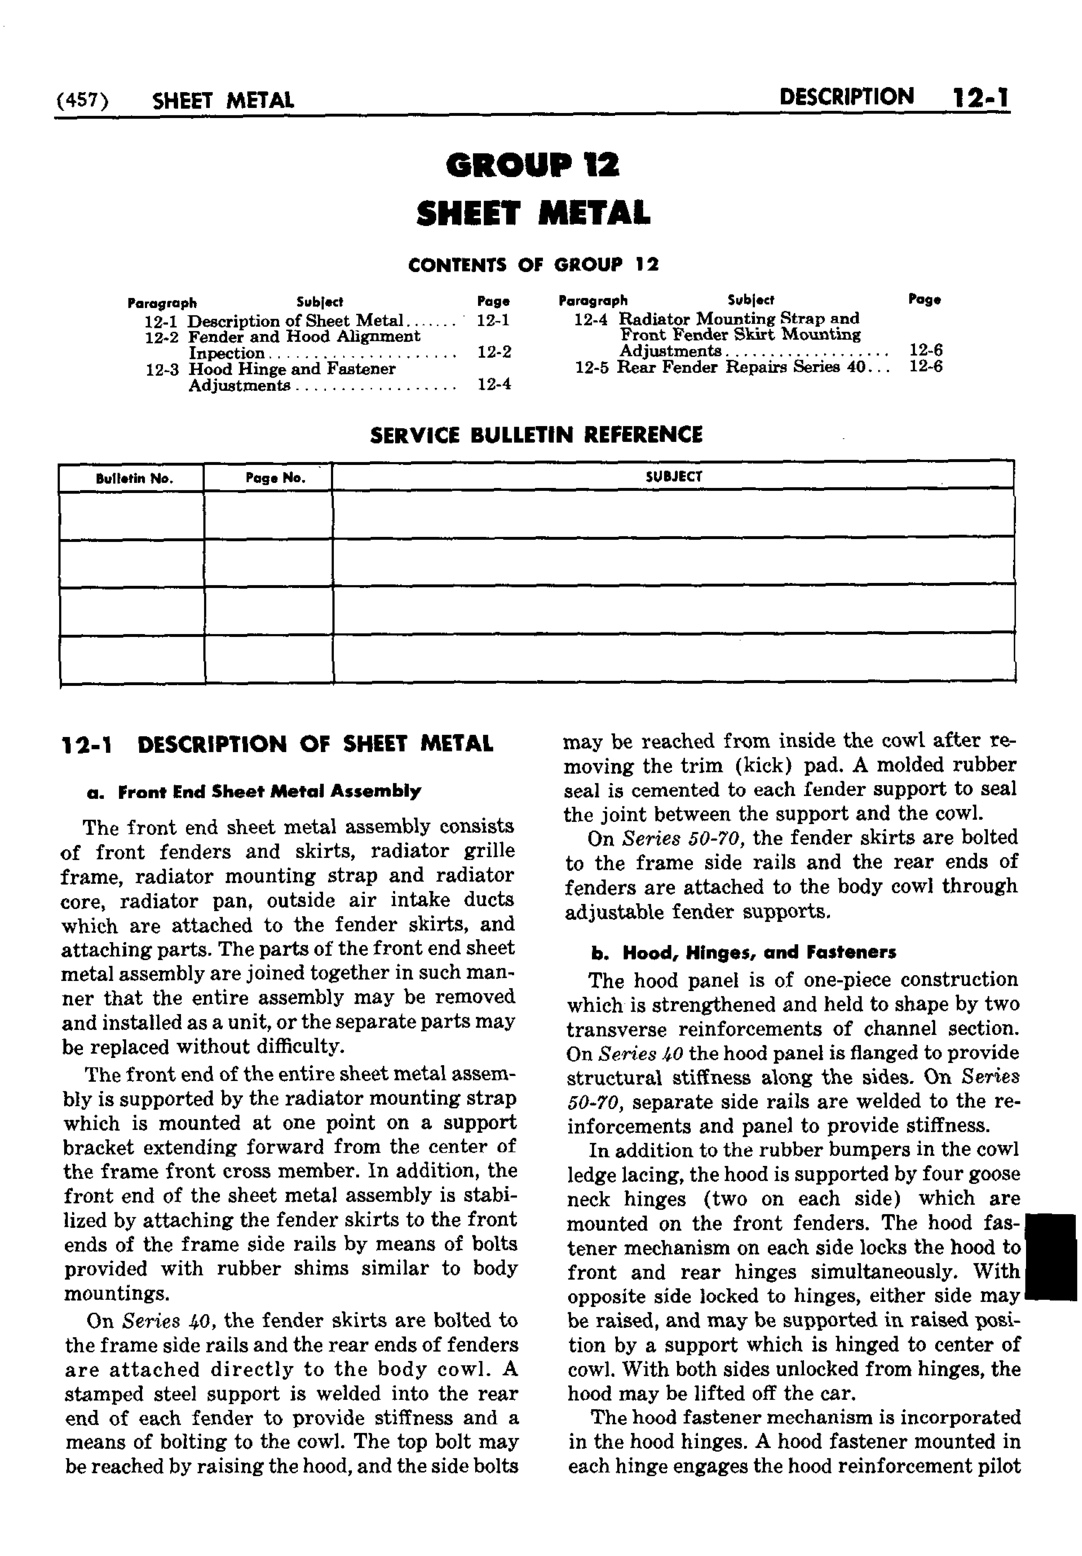 n_13 1952 Buick Shop Manual - Sheet Metal-001-001.jpg